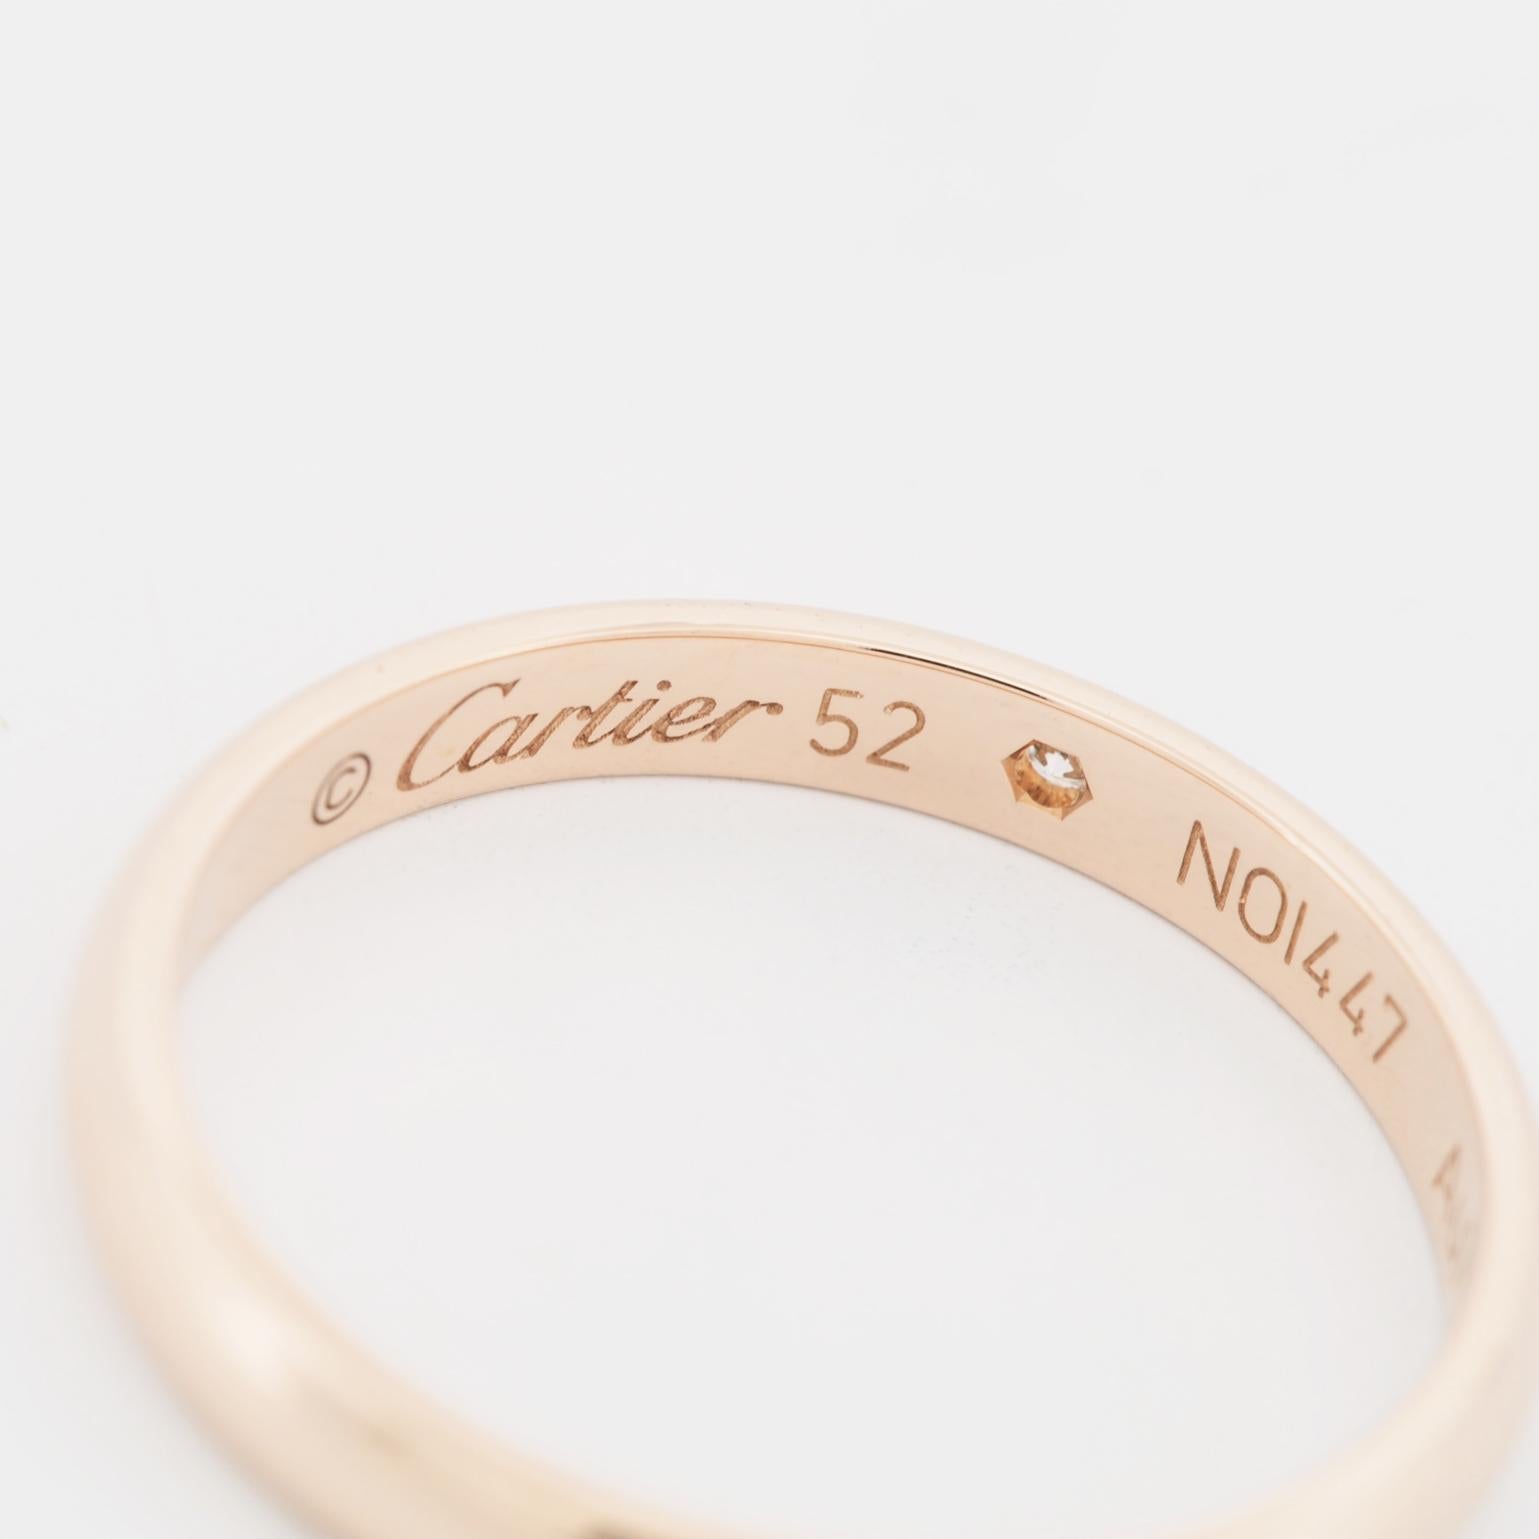 Cartier 1895 Wedding Band Diamond Ring 52 PG US 6.0 1